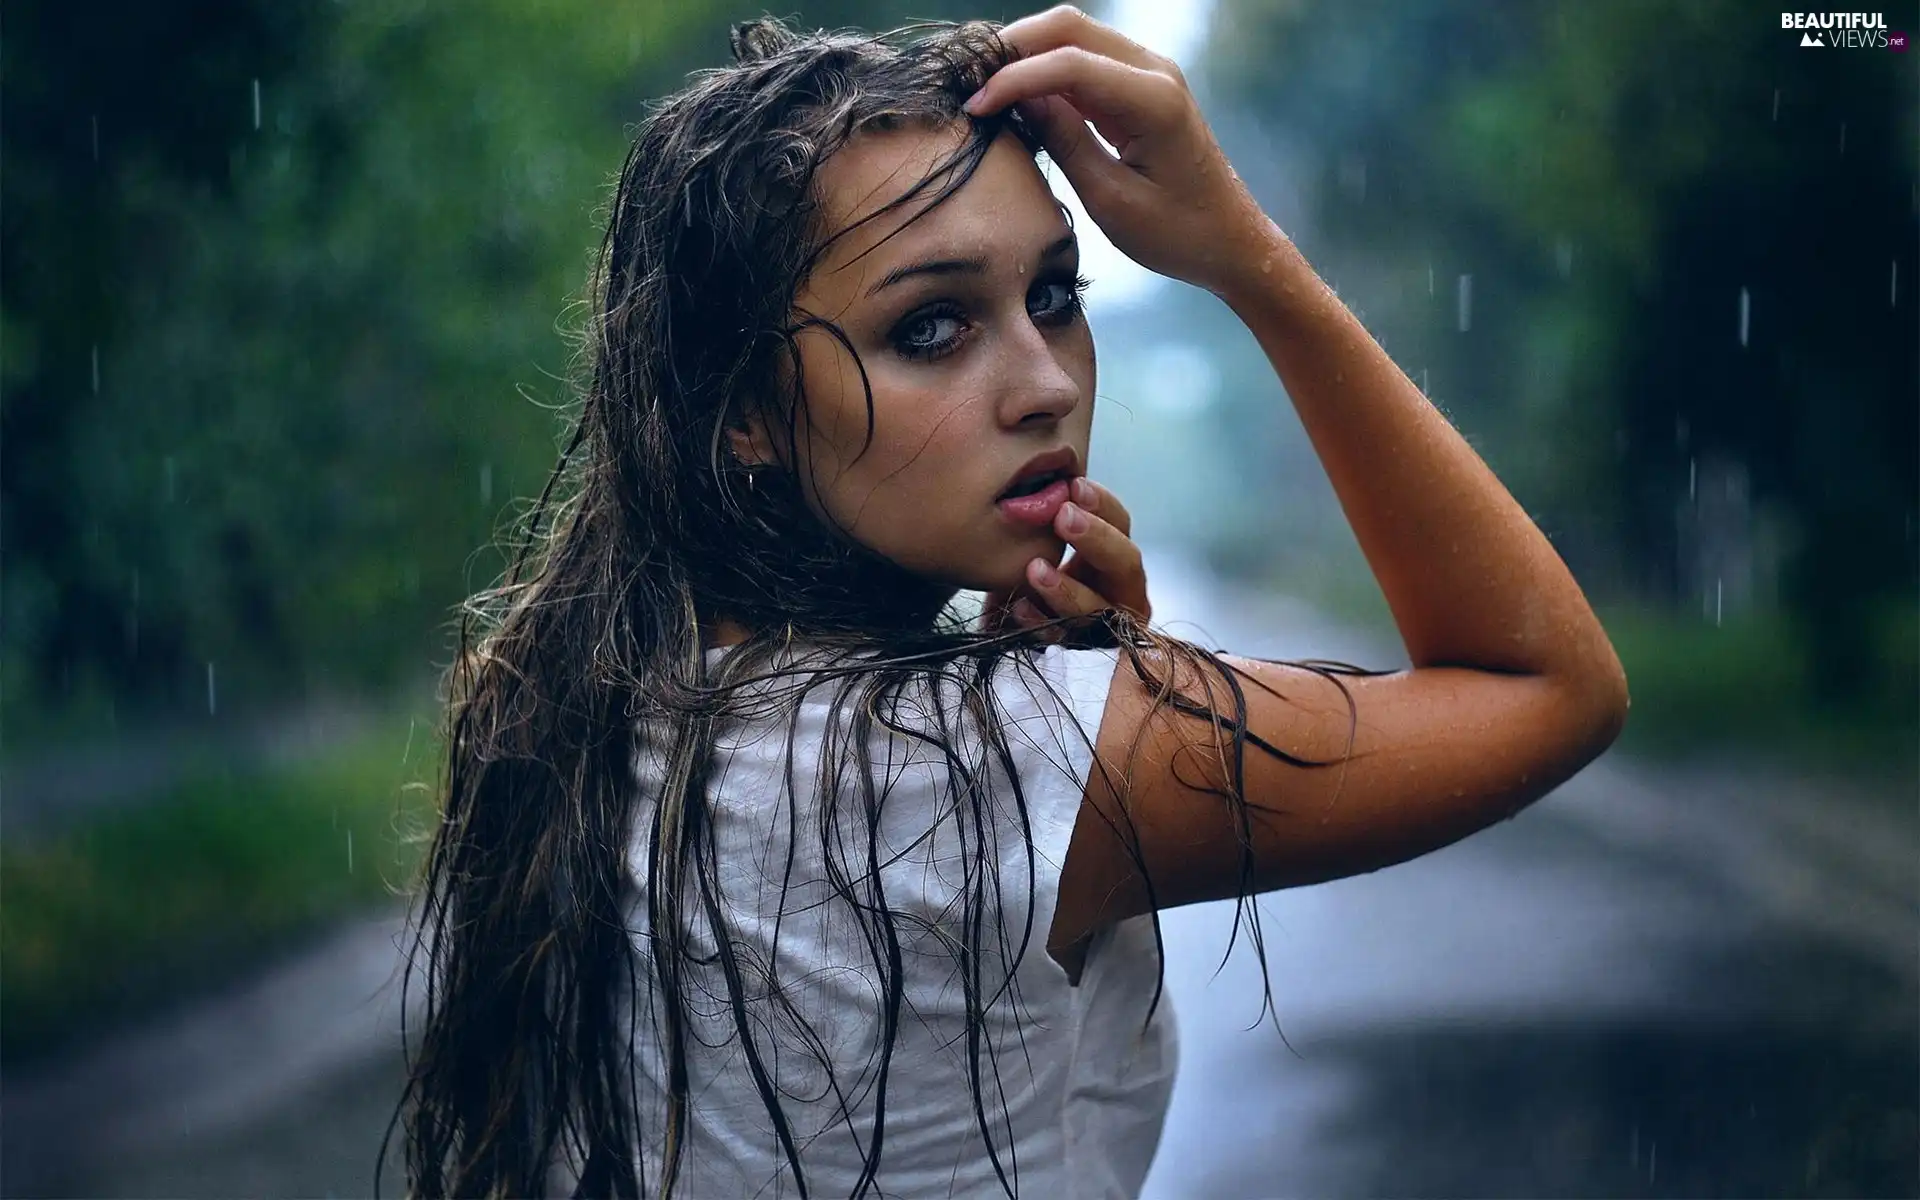 Hair, Women, make-up, The look, Rain, wet